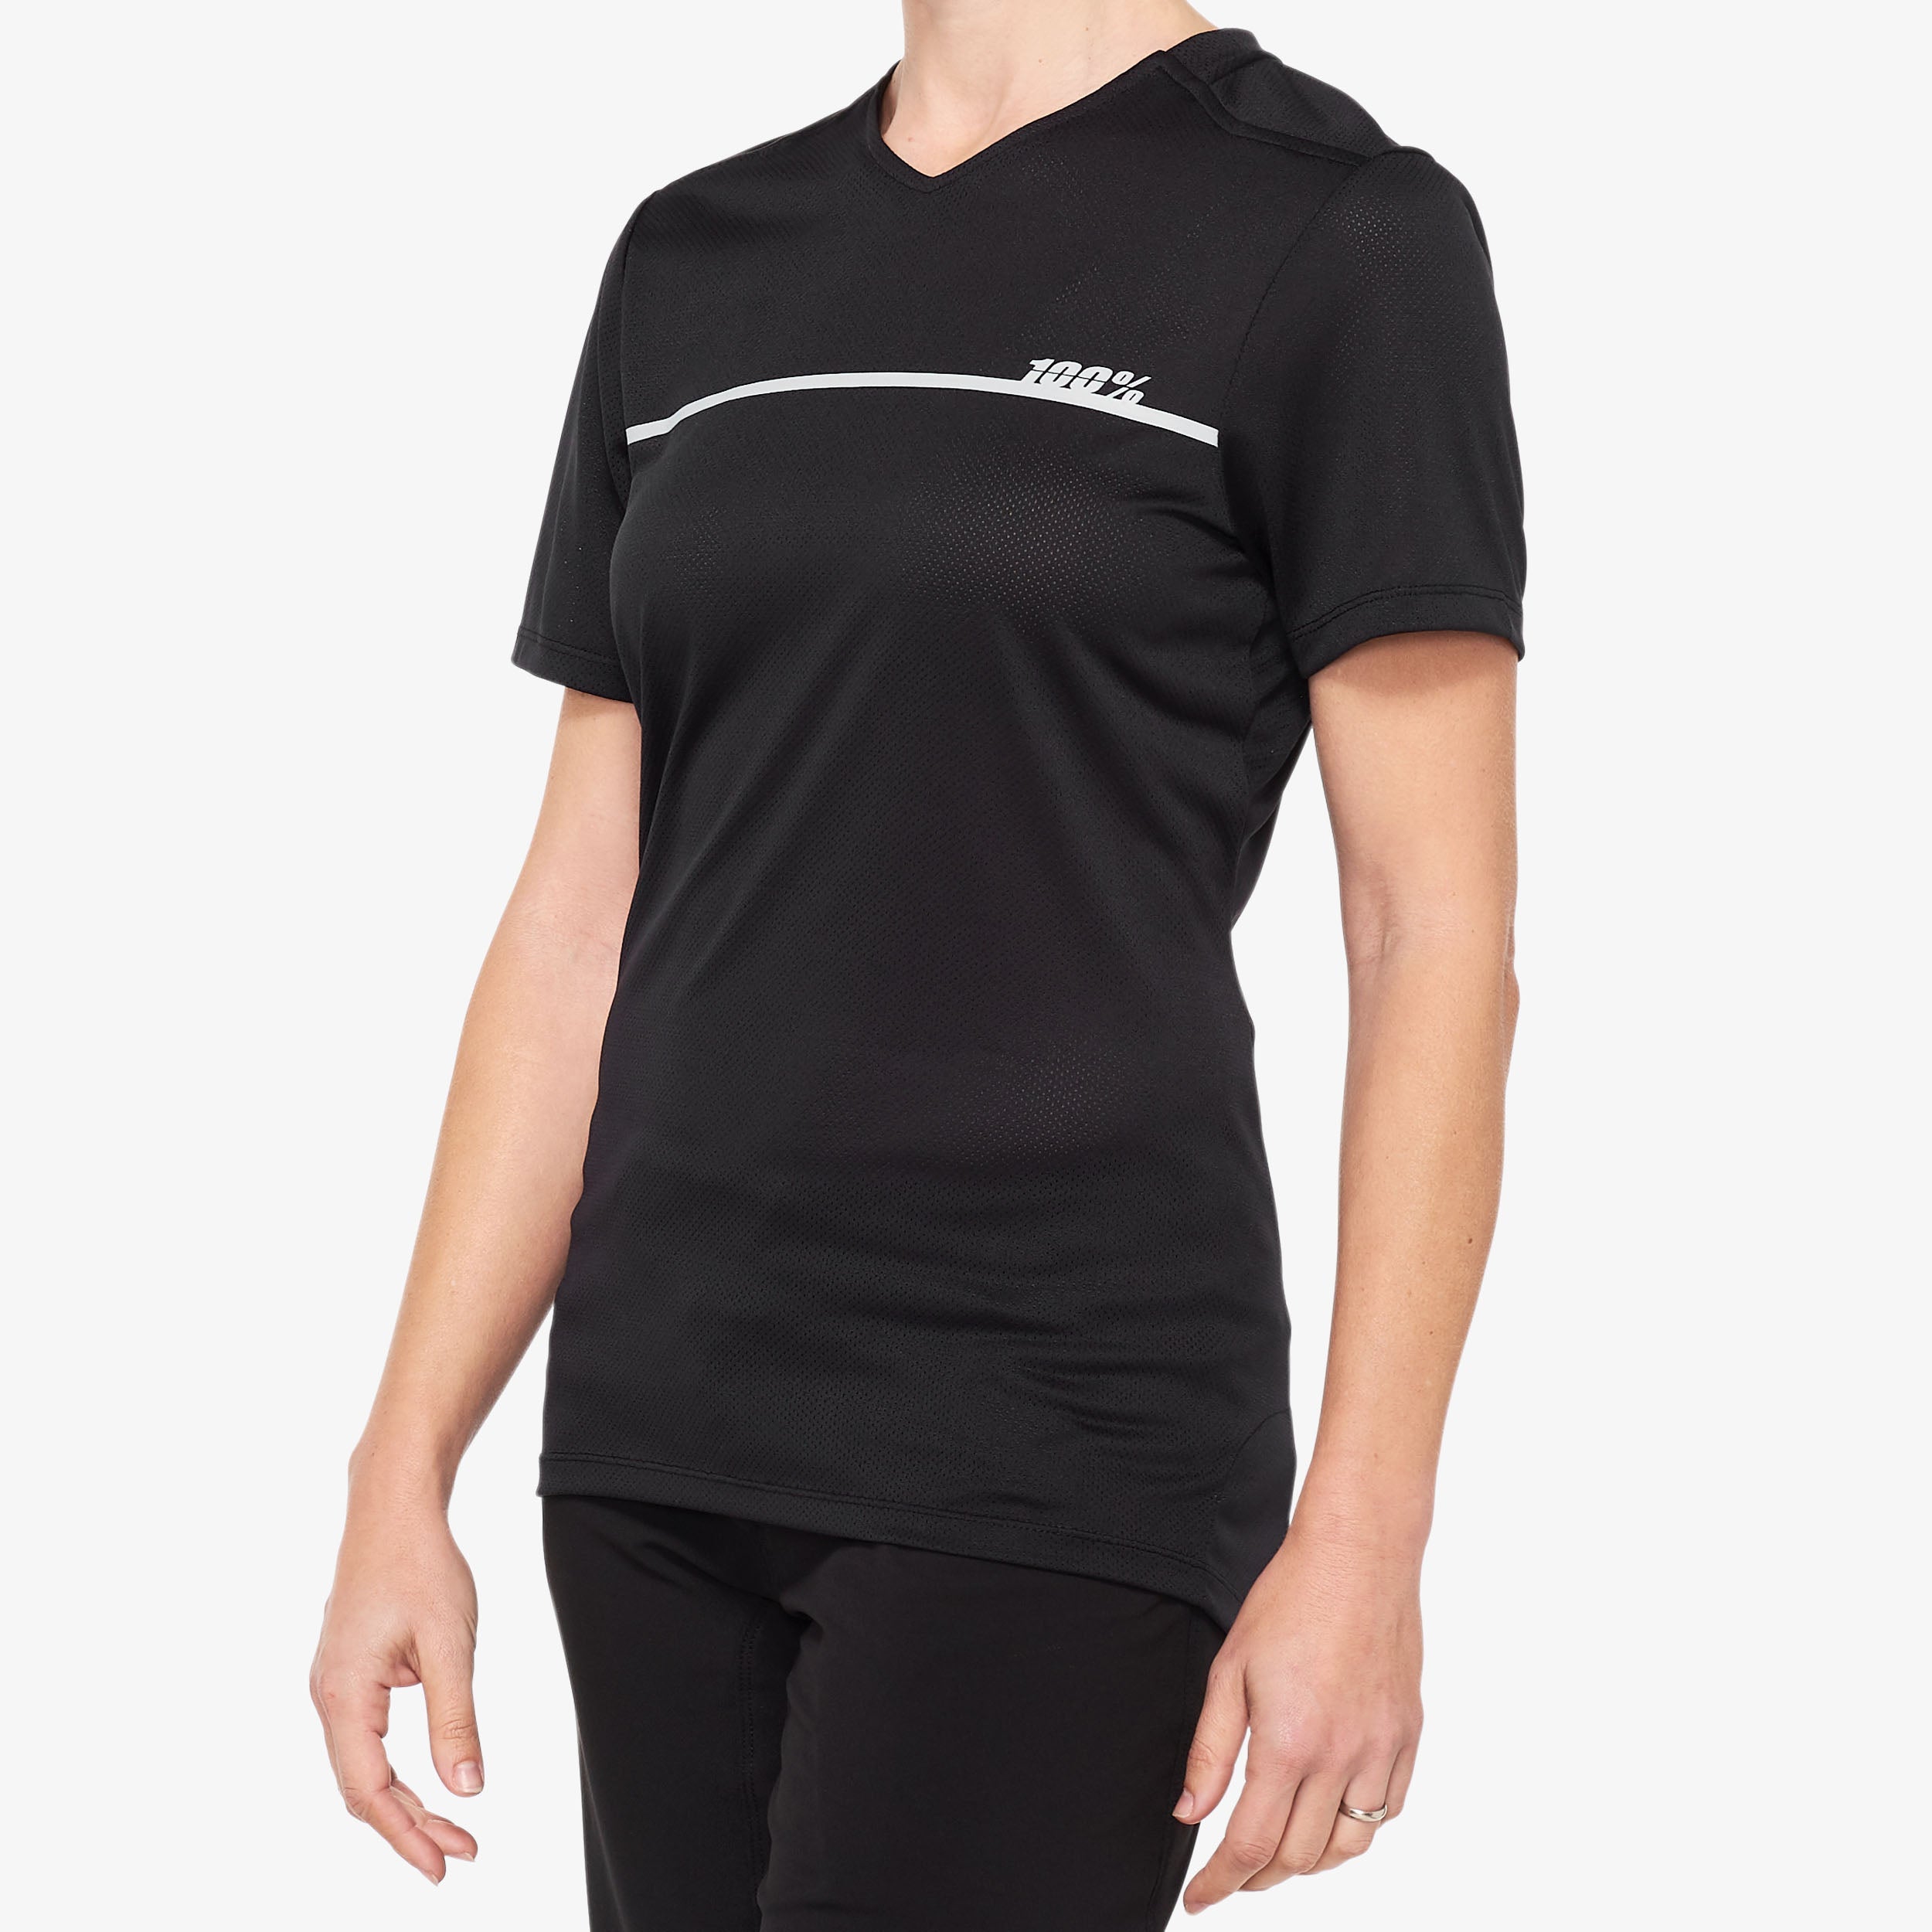 RIDECAMP Women's Short Sleeve Jersey Black/Grey